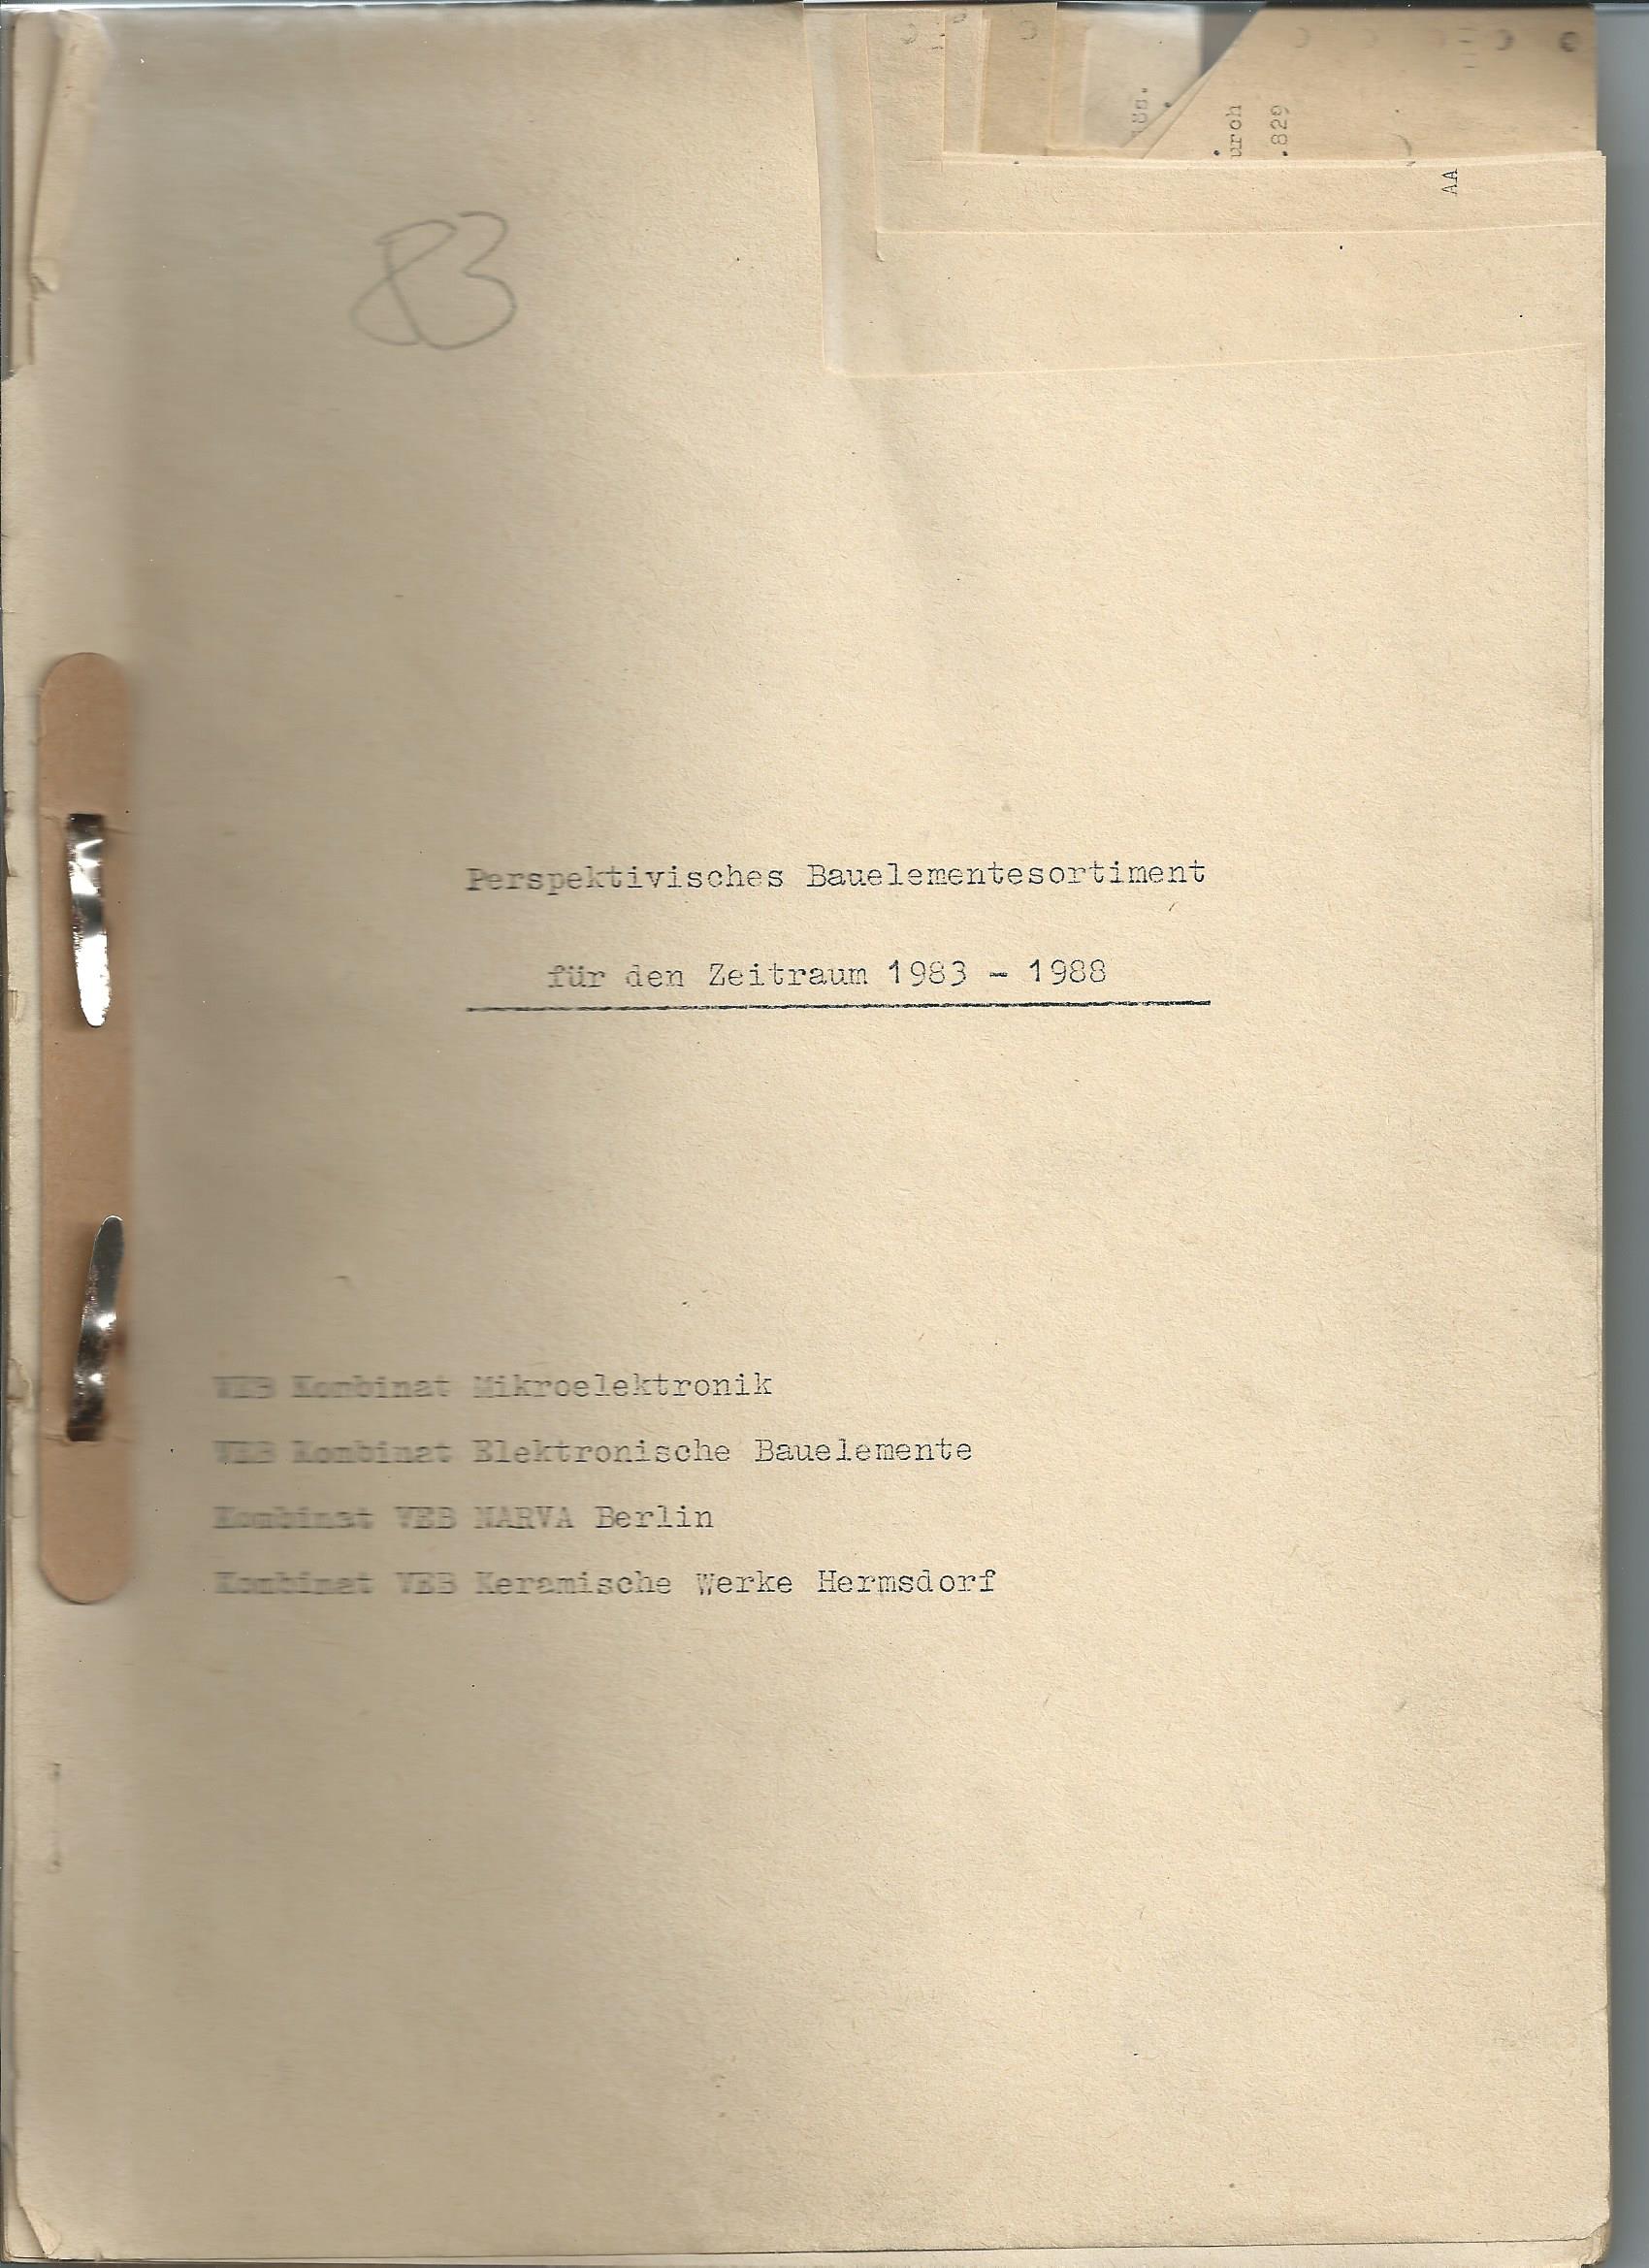 Bauelementesortimentsliste 1983 -  VVS B410-59/83 (Industriesalon Schöneweide CC BY-SA)